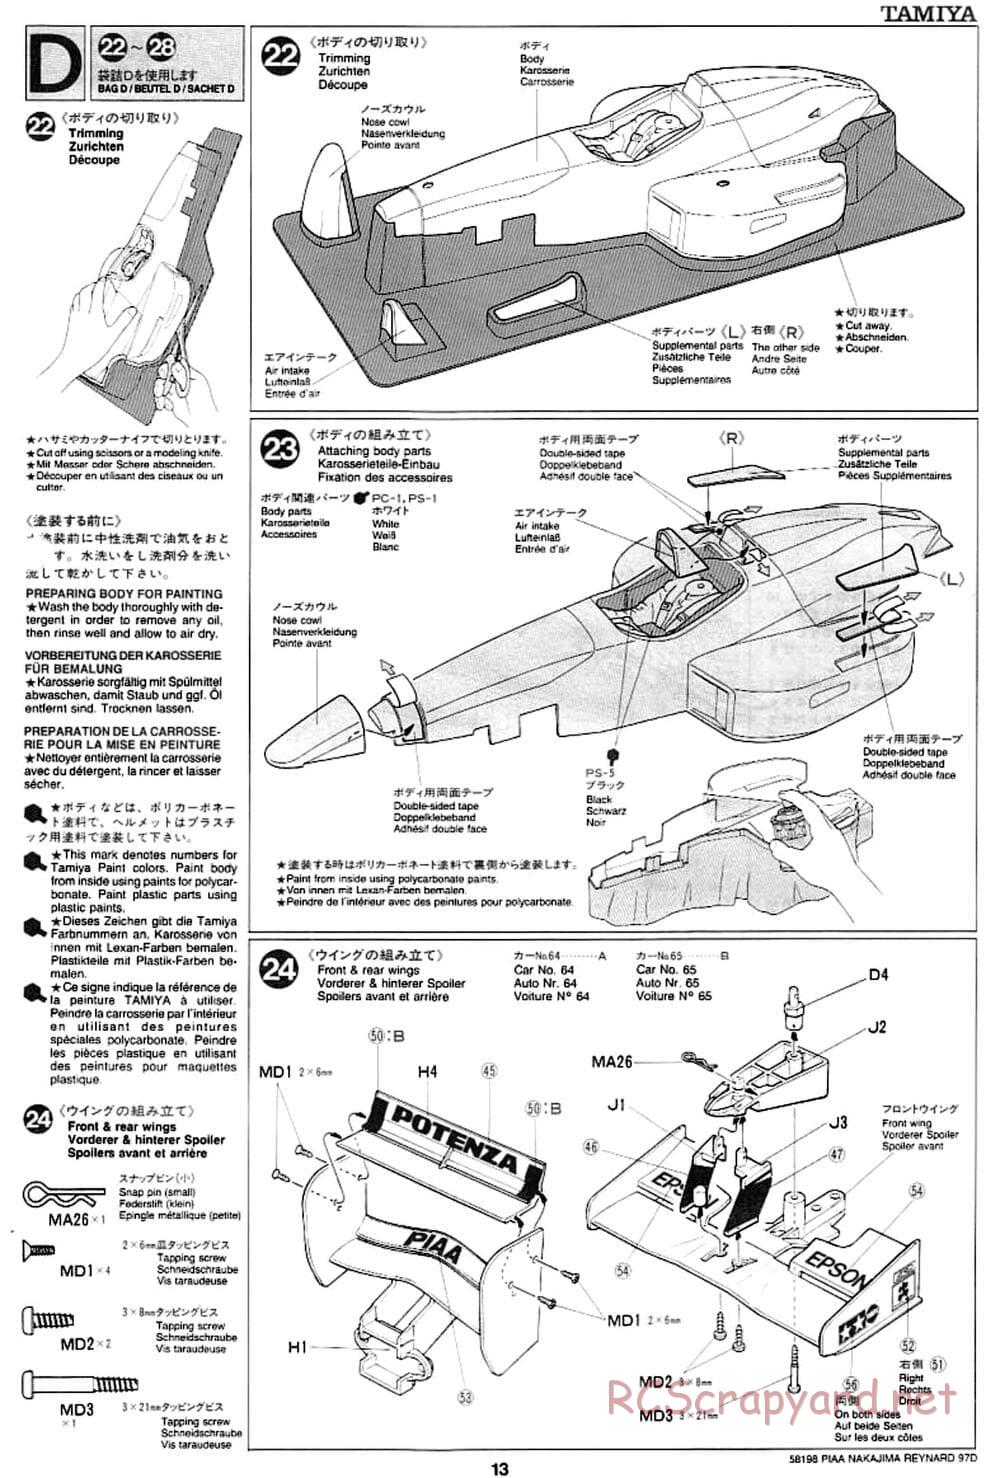 Tamiya - PIAA Nakajima Reynard 97D - F103 Chassis - Manuale - Page 13